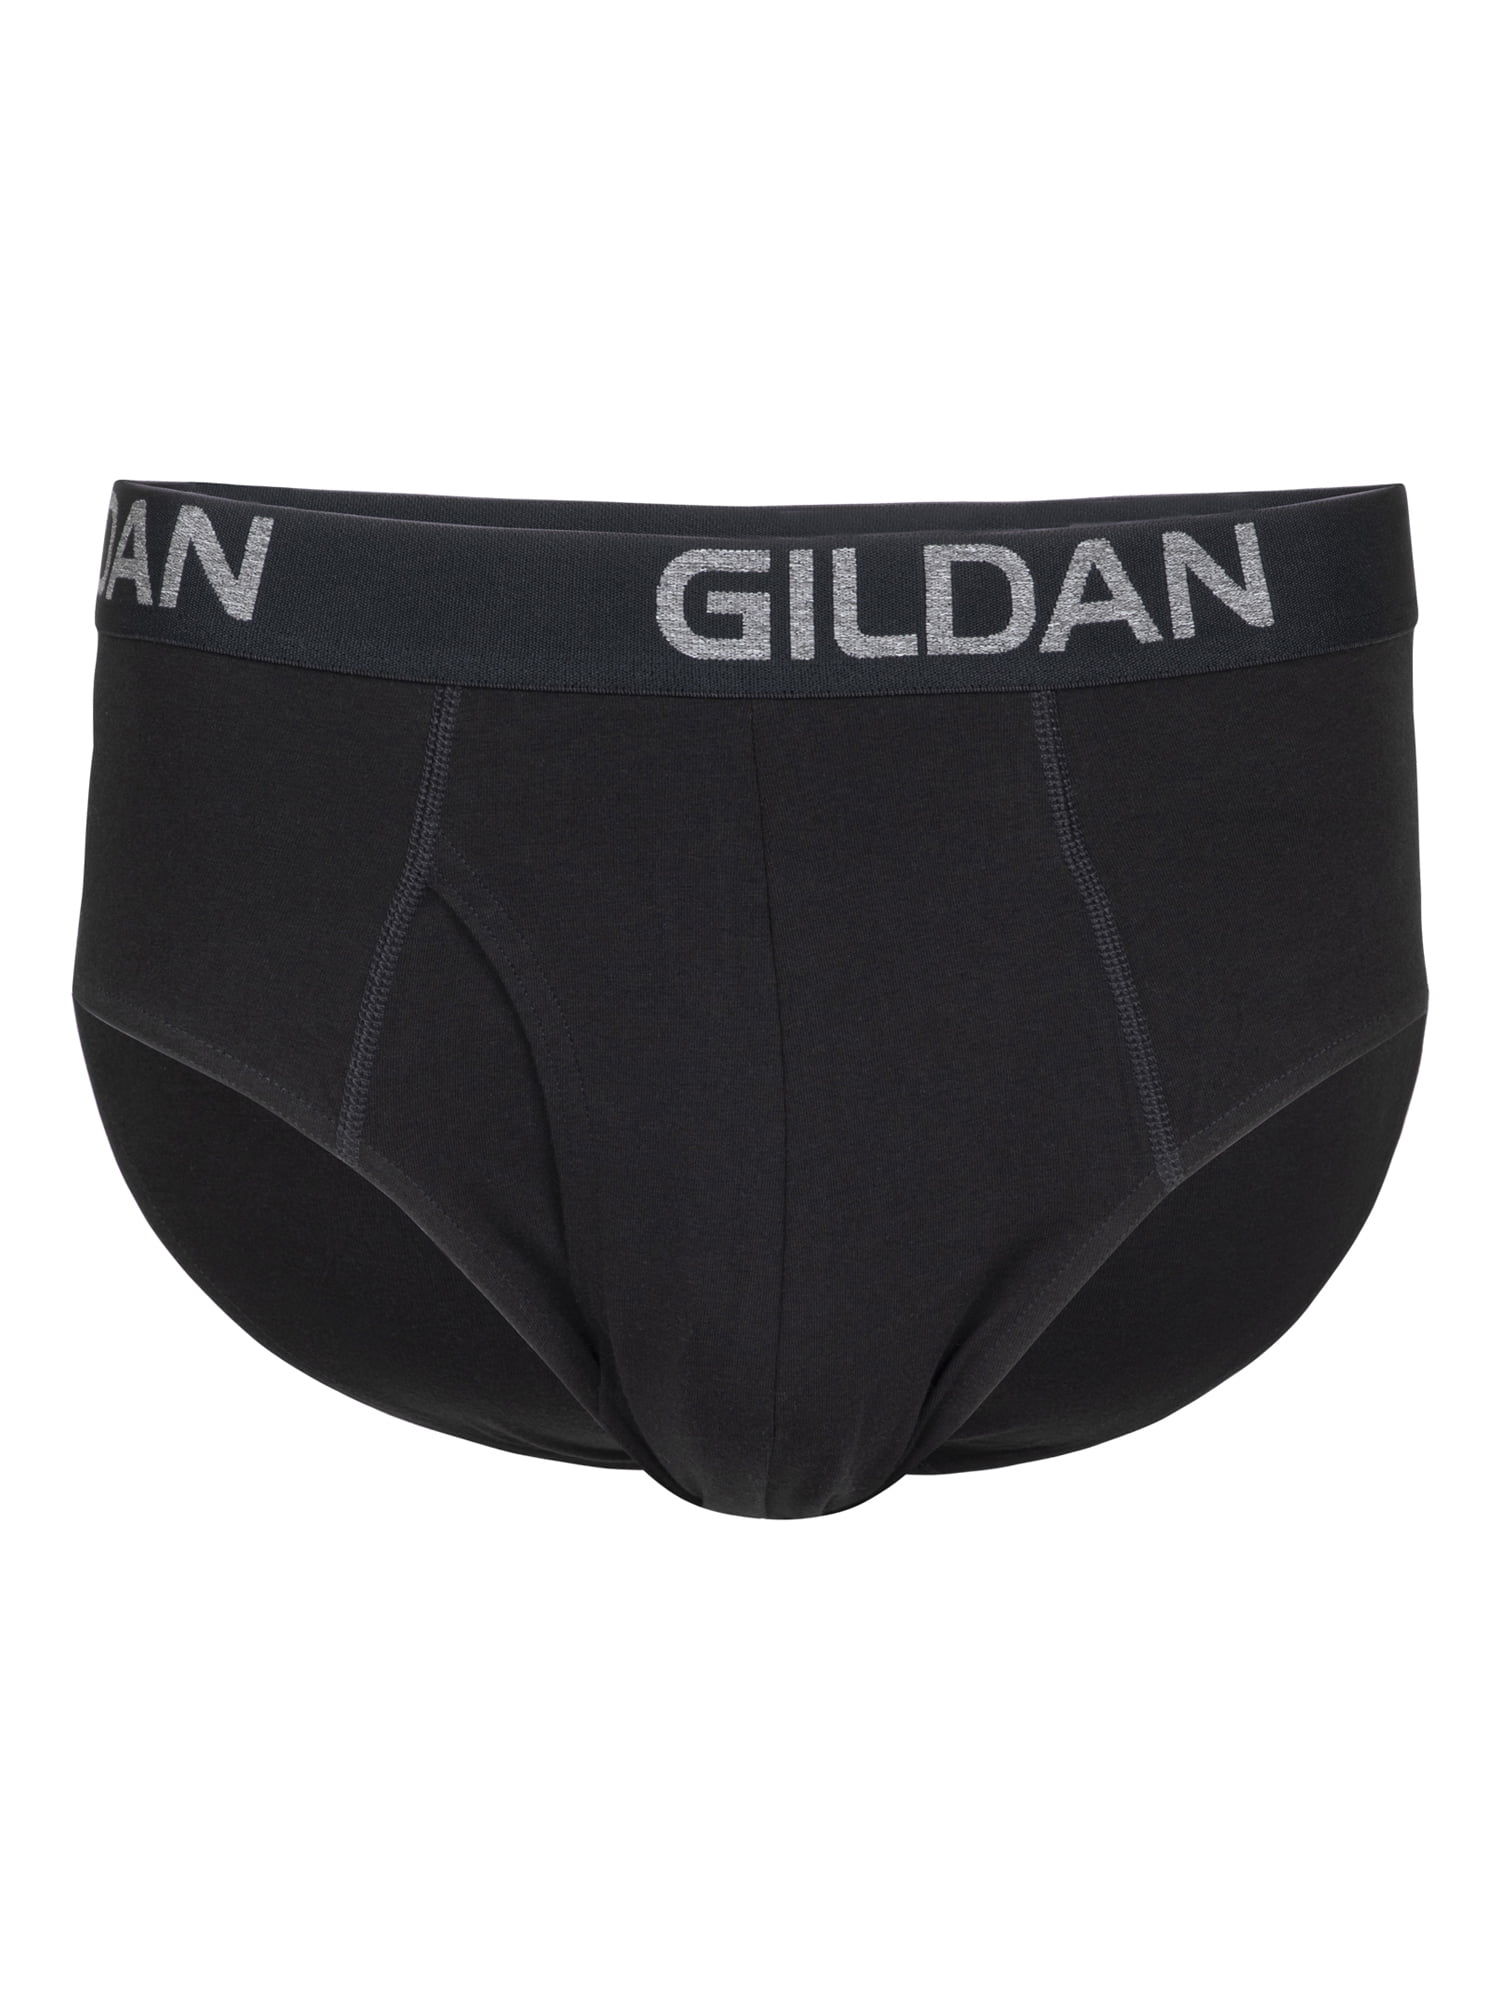 GILDAN MEN'S BOXER Briefs, 5-Pack (Black, Dark Gray), Size Large